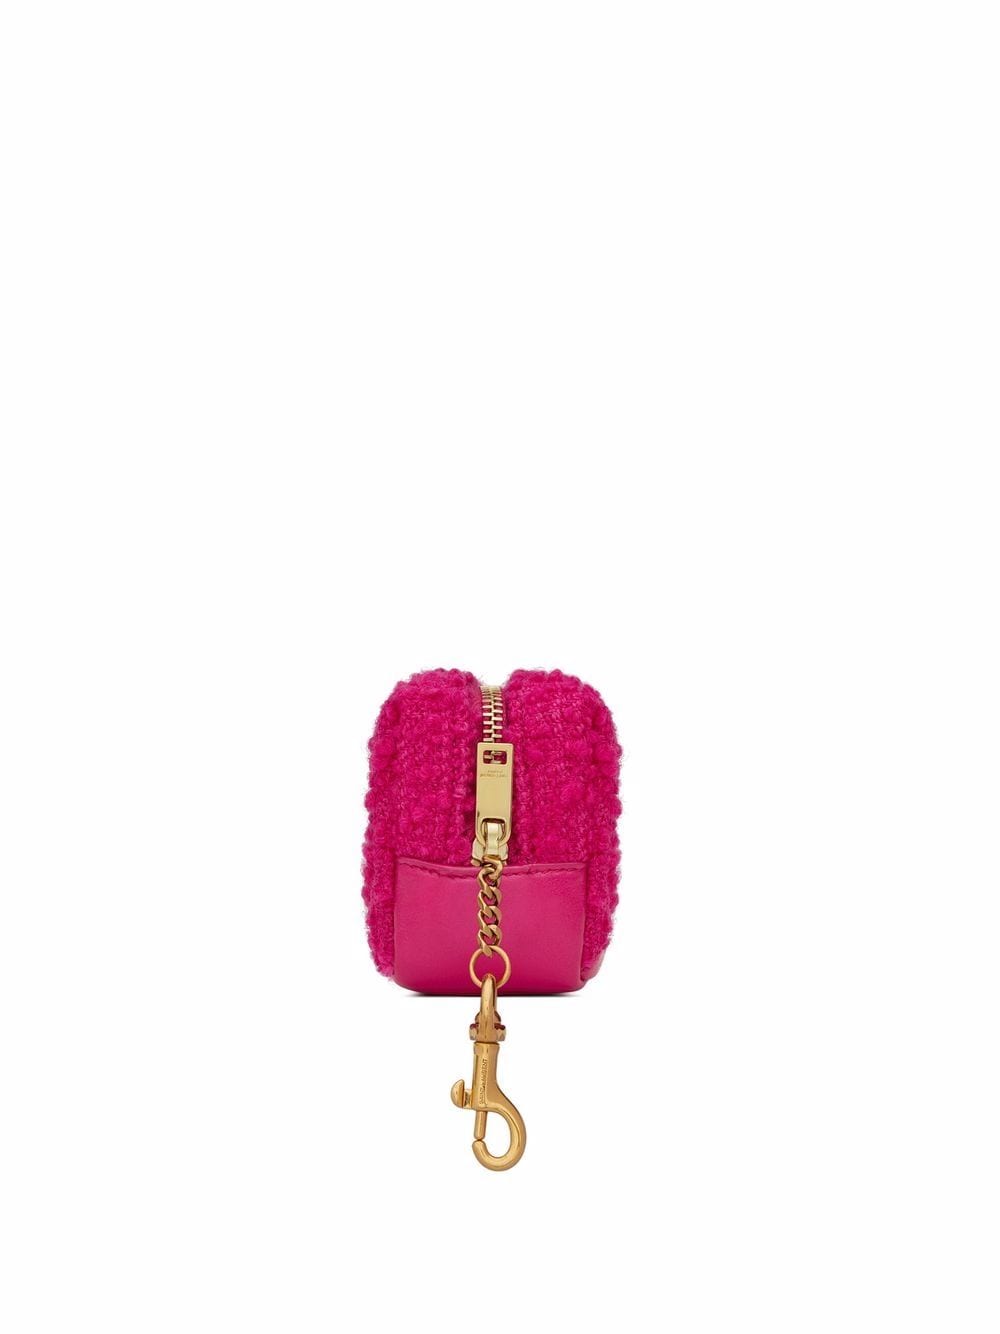 SAINT LAURENT: key chain for woman - Pink  Saint Laurent key chain  669964AAAA0 online at